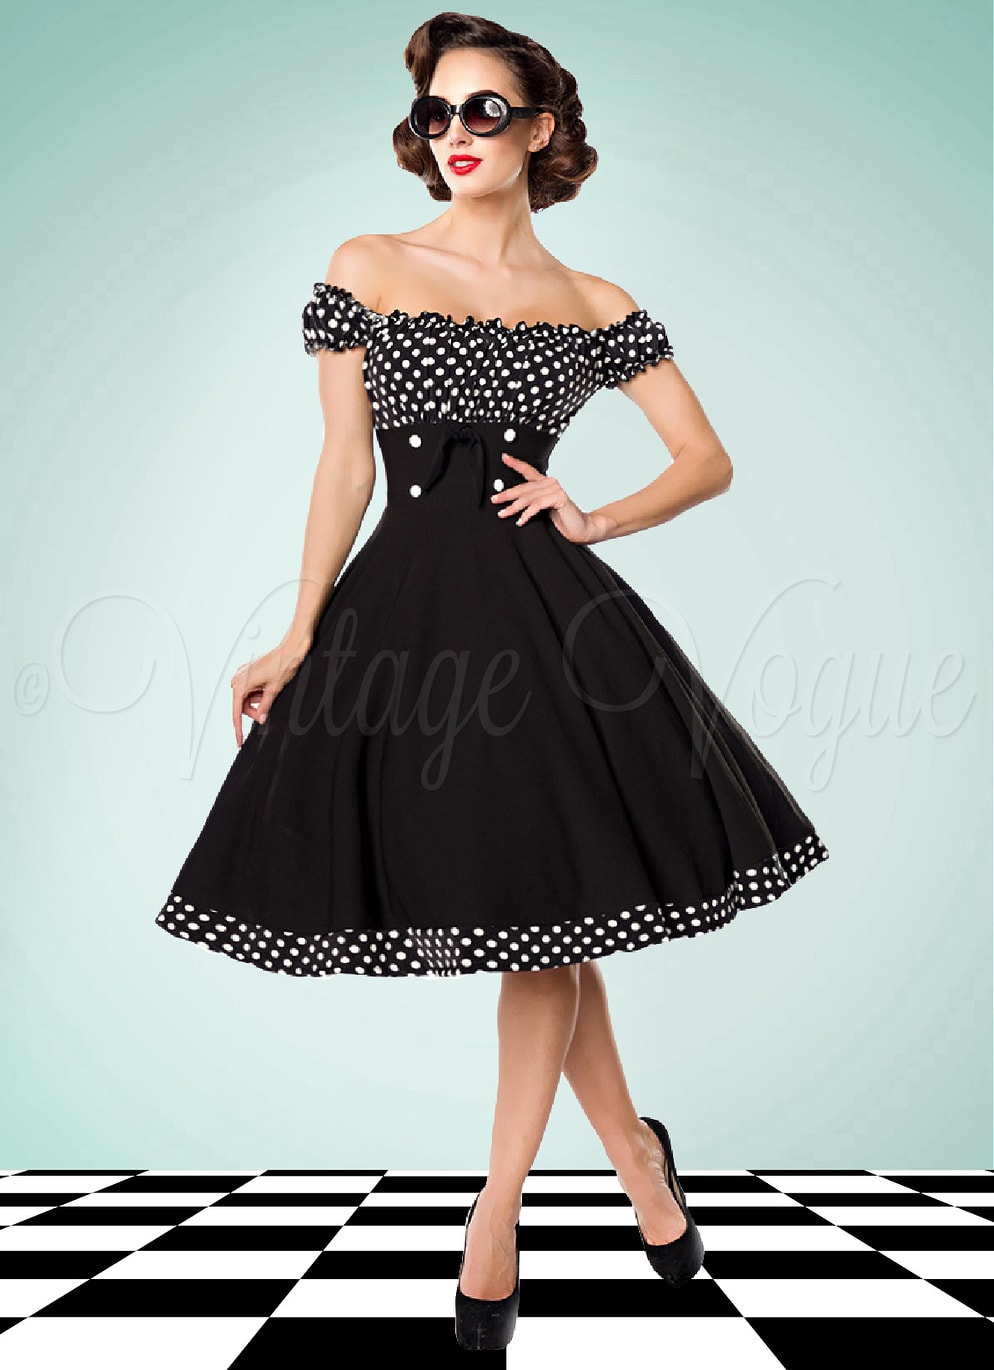 Belsira 50's Retro Rockabilly Pin-Up Swing Kleid mit Polka Dots Muster in Schwarz Weiß Petticoat Damen Damenkleid Punkte gepunktet tupfen Jive Lindy Hop Mottoparty Rock n Roll